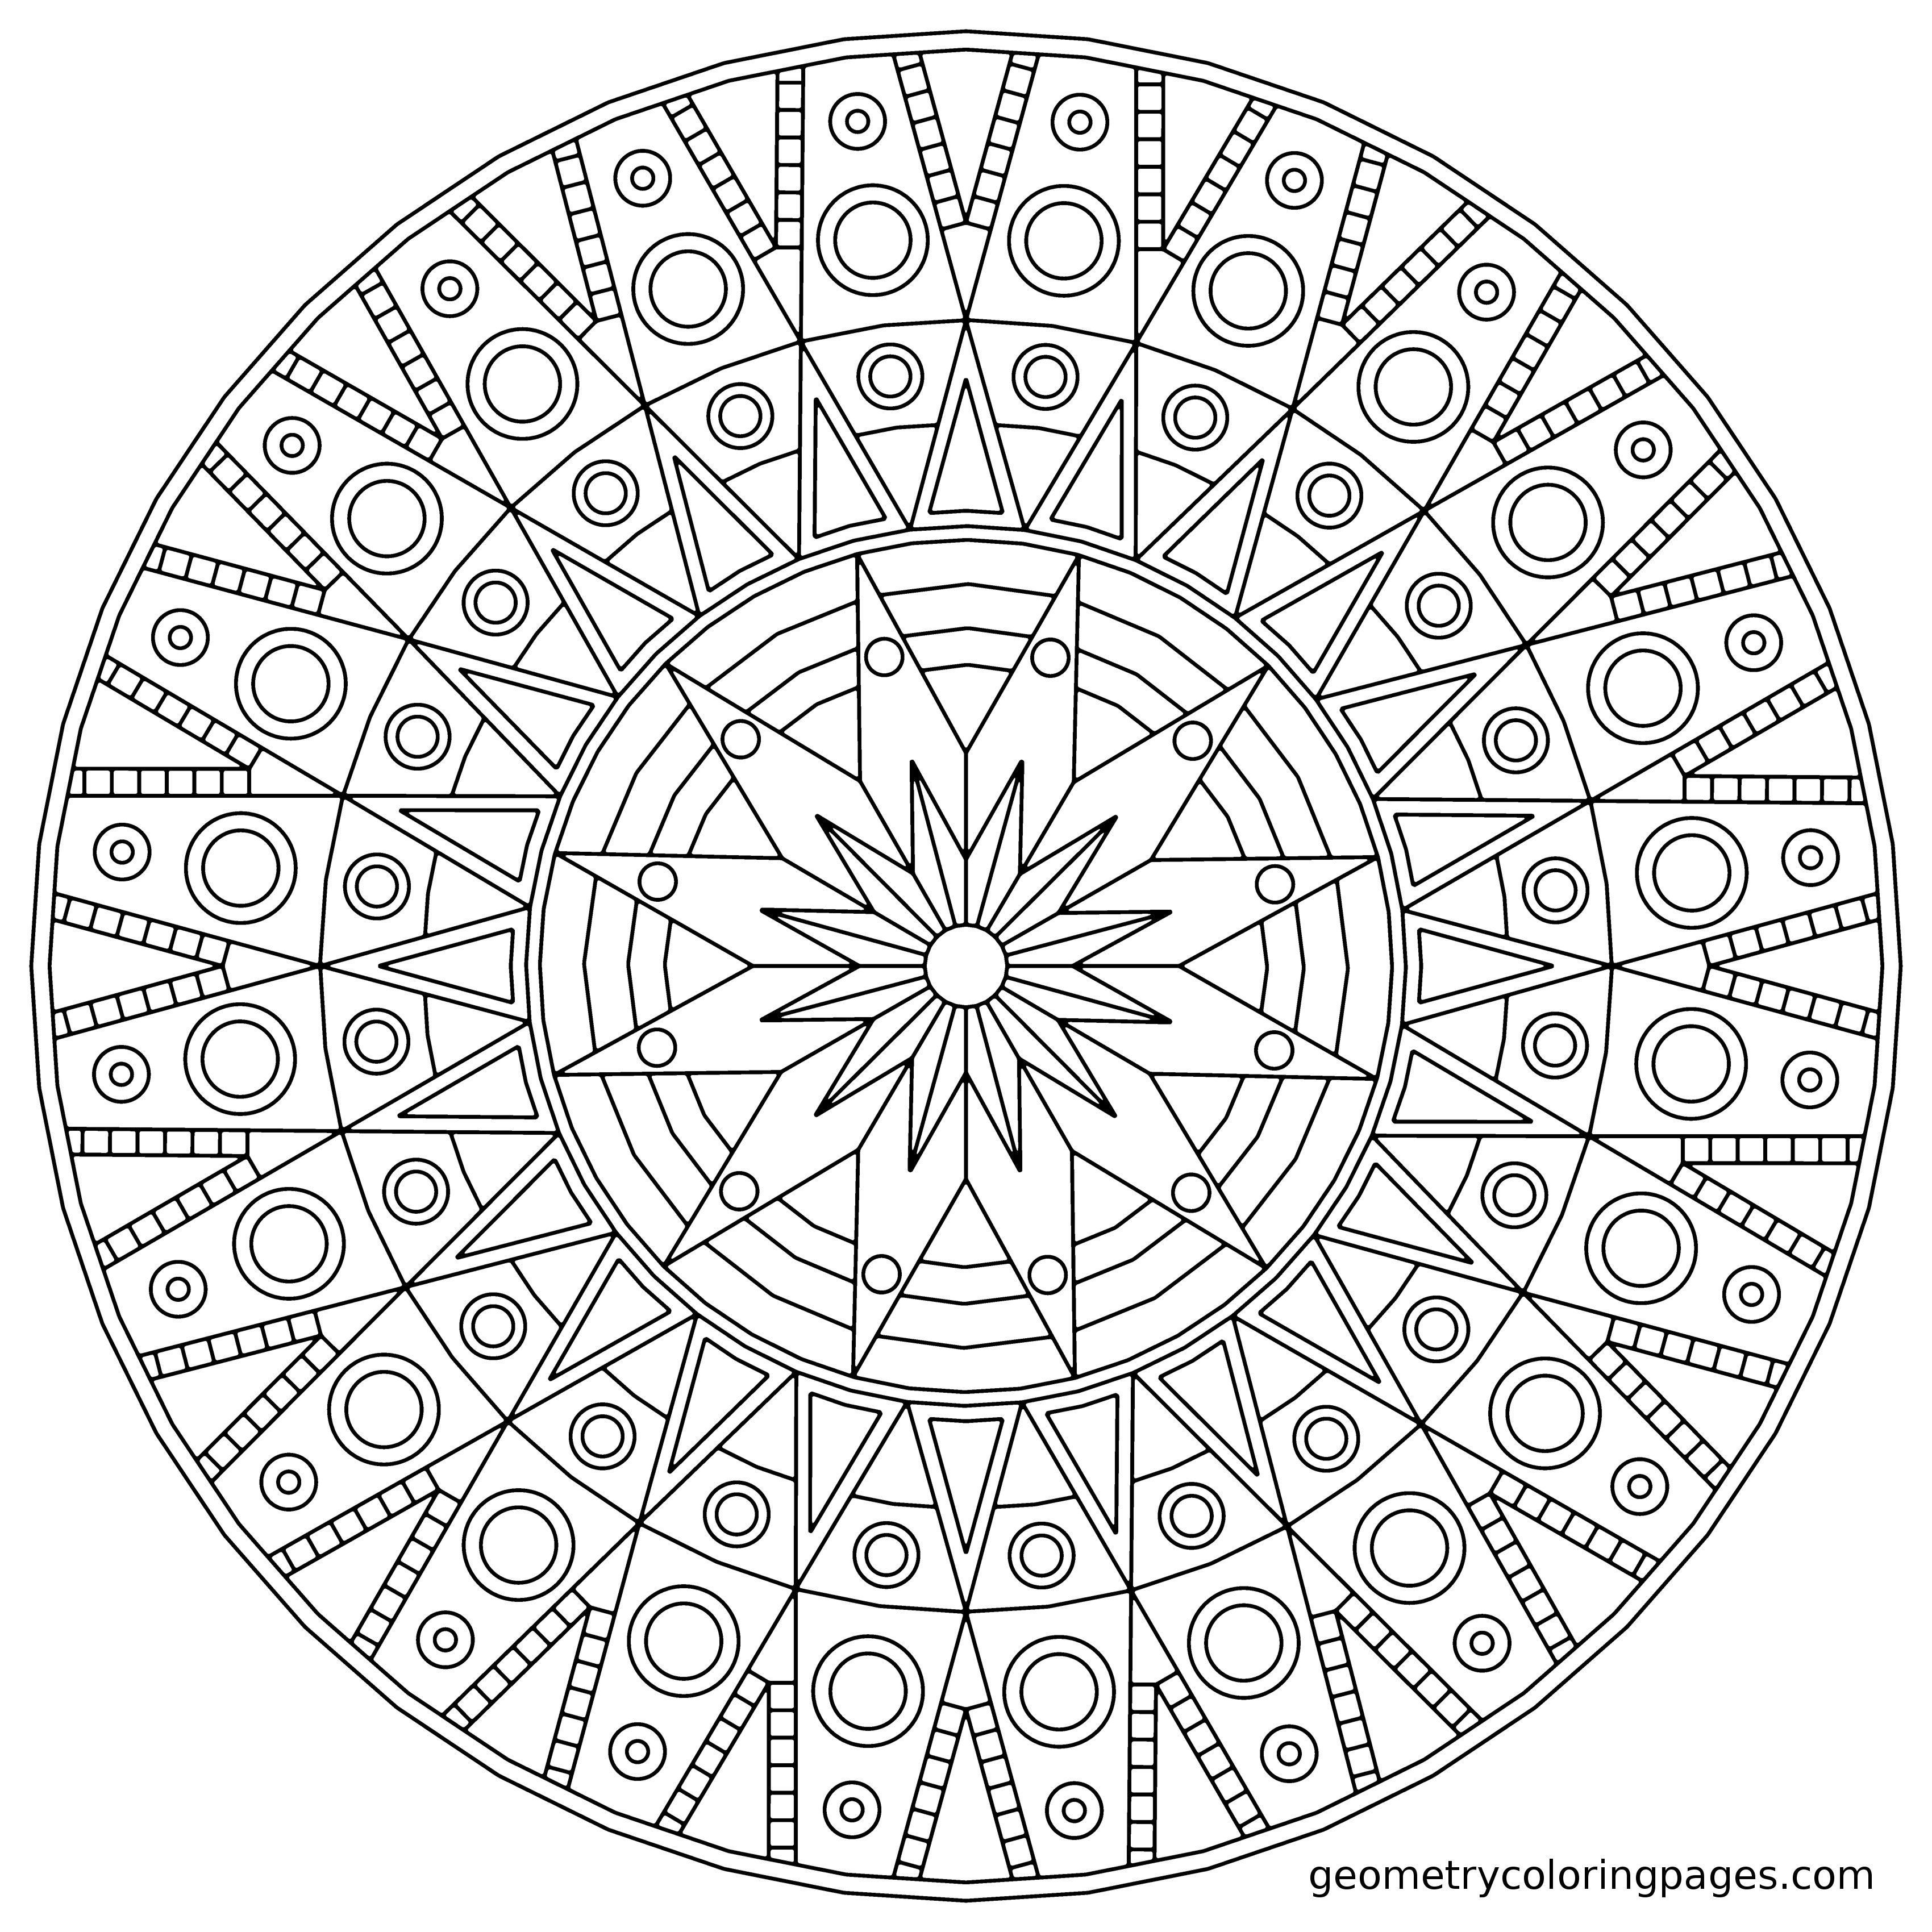 Free Geometric Mandala Coloring Pages, Download Free Geometric Mandala ...